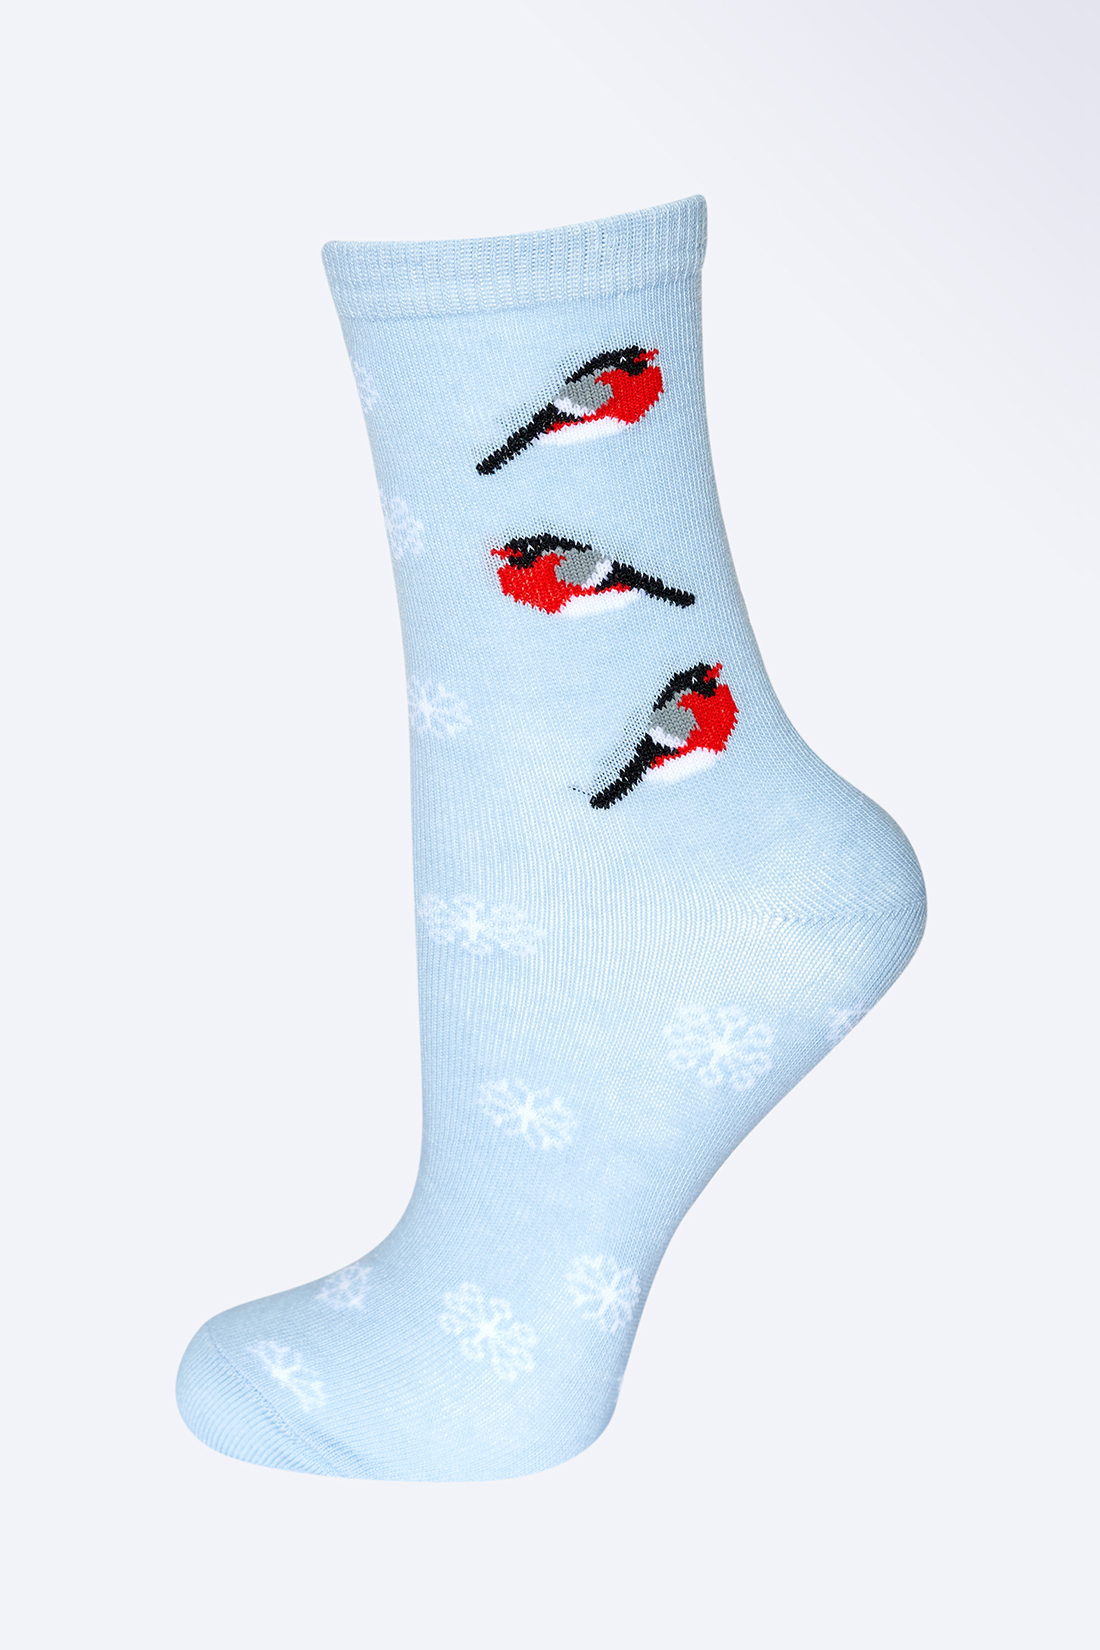 Носки со снегирями (арт. baon B399501), размер 35/37, цвет голубой Носки со снегирями (арт. baon B399501) - фото 1